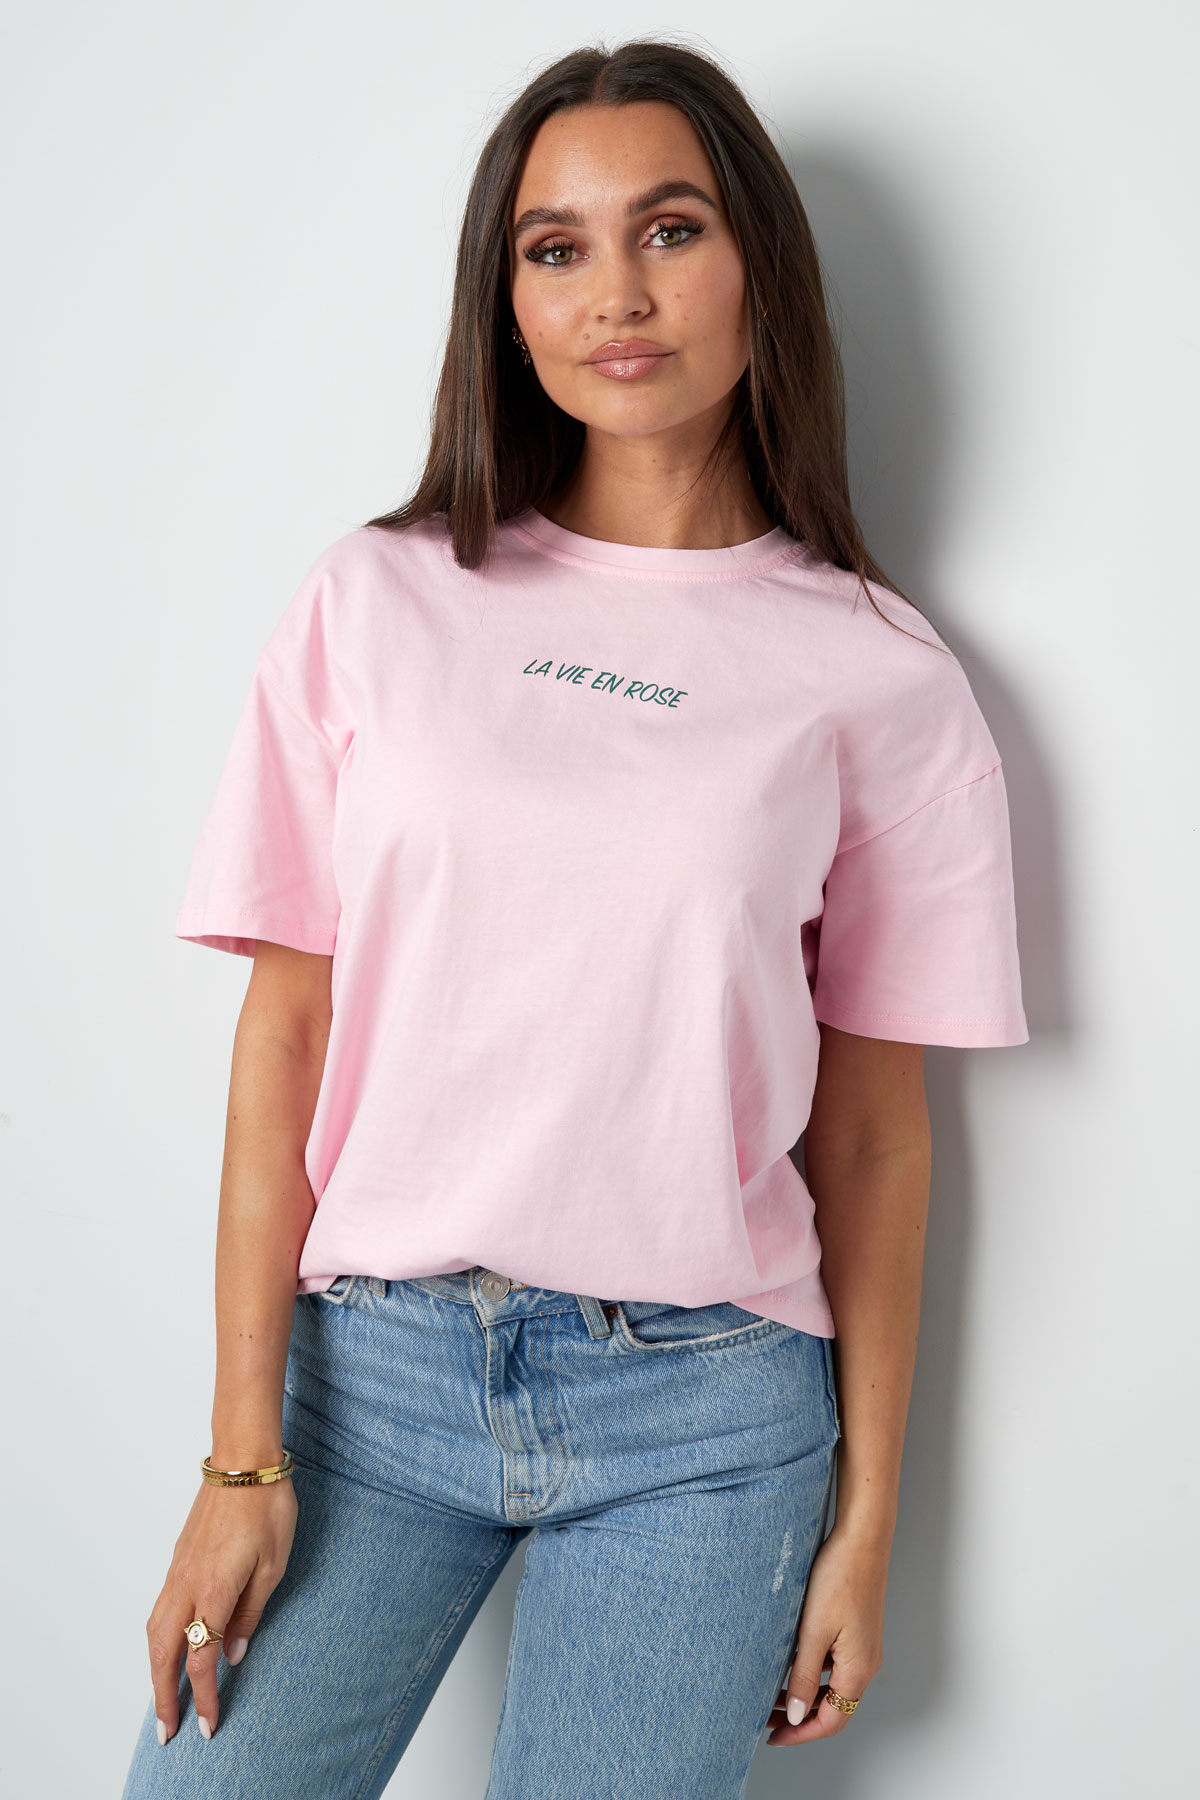 T-shirt la vie en rose - rosa h5 Immagine5